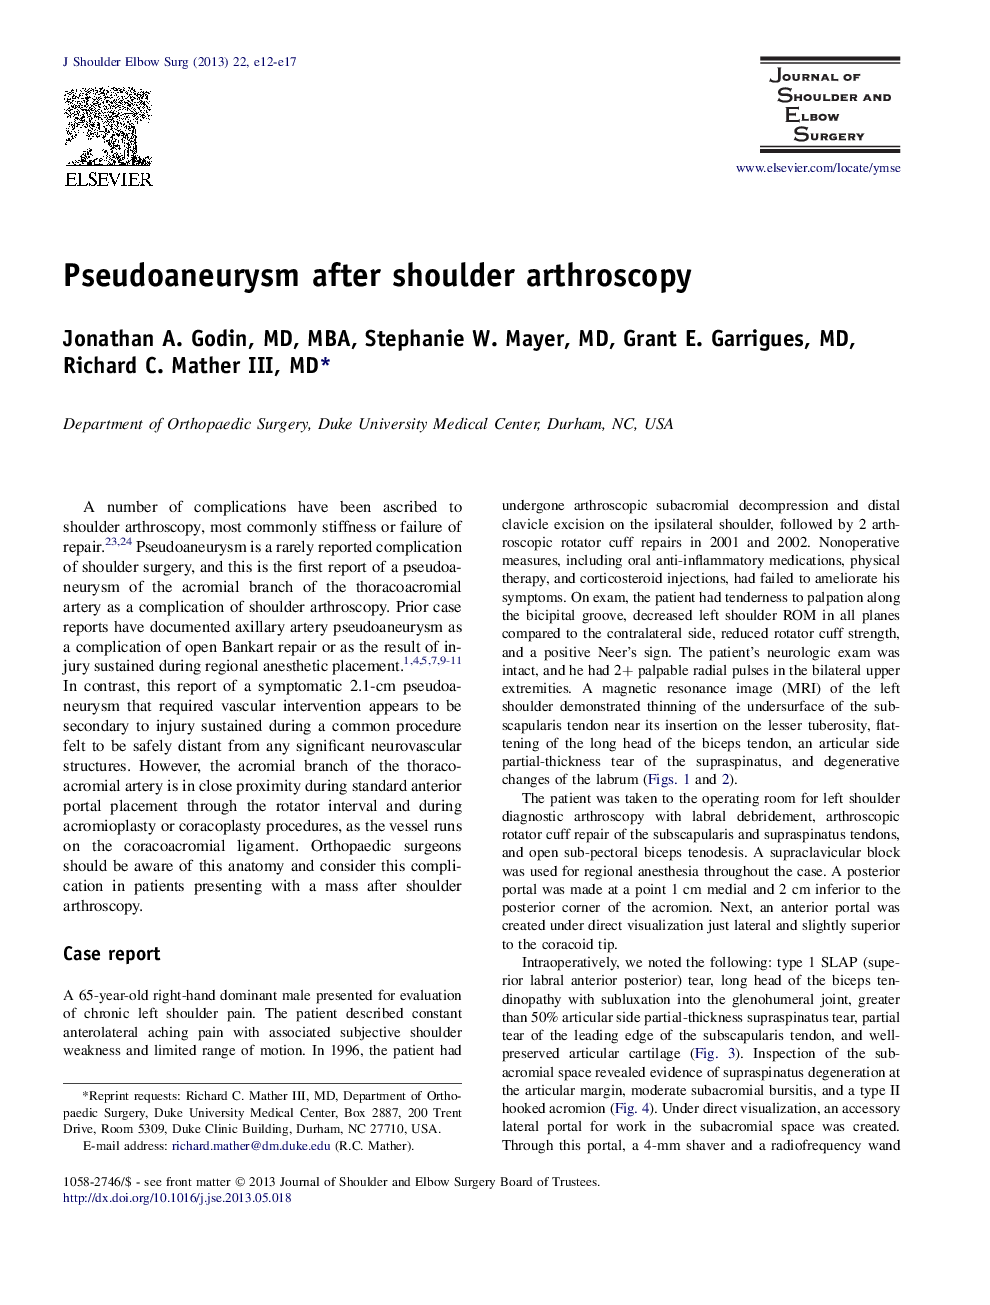 Pseudoaneurysm after shoulder arthroscopy